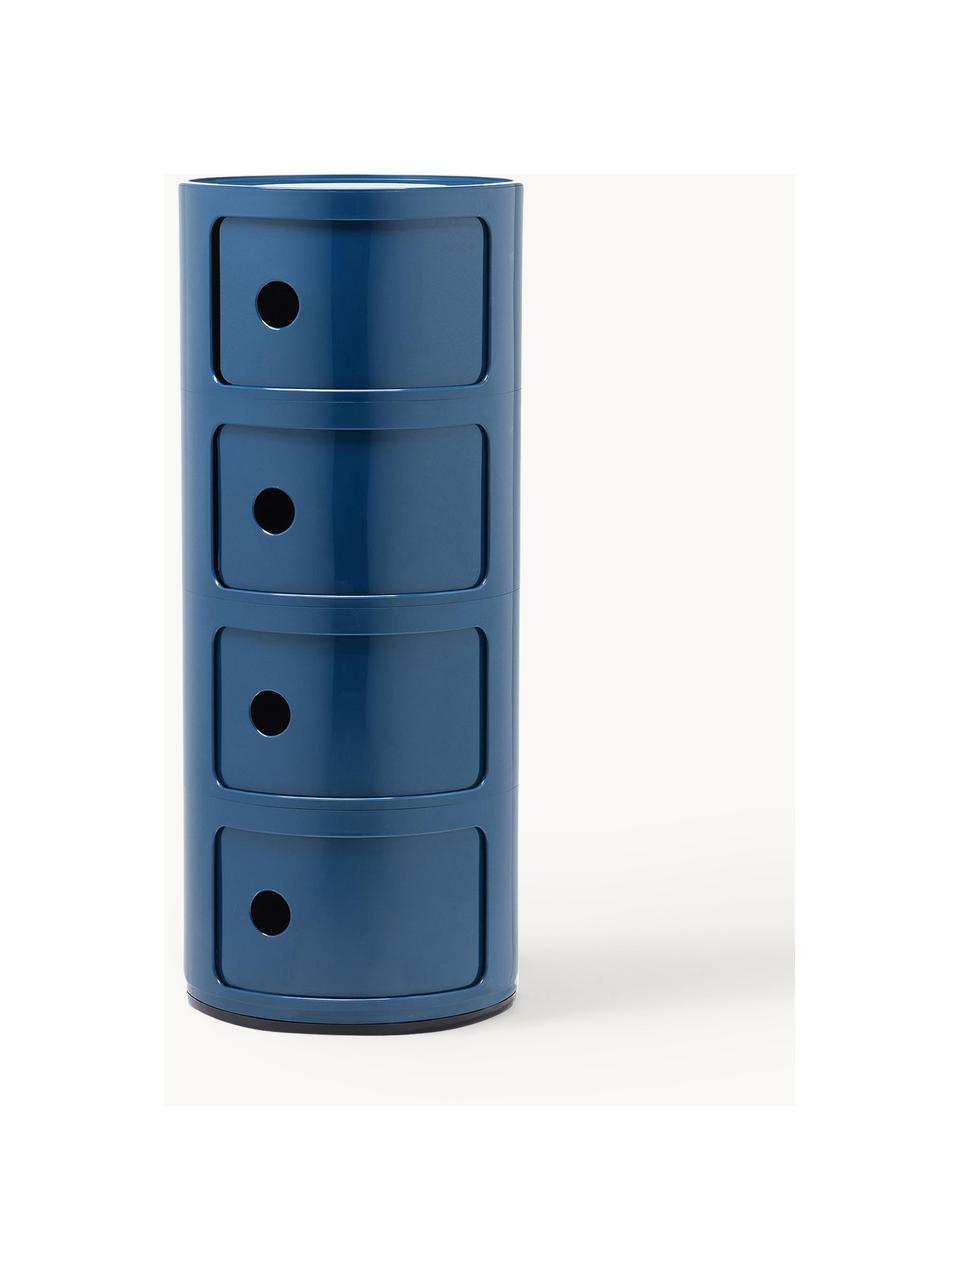 Design container Componibili, 4 modules, Kunststof (ABS), gelakt, Greenguard-gecertificeerd, Grijsblauw, glanzend, Ø 32 x H 77 cm